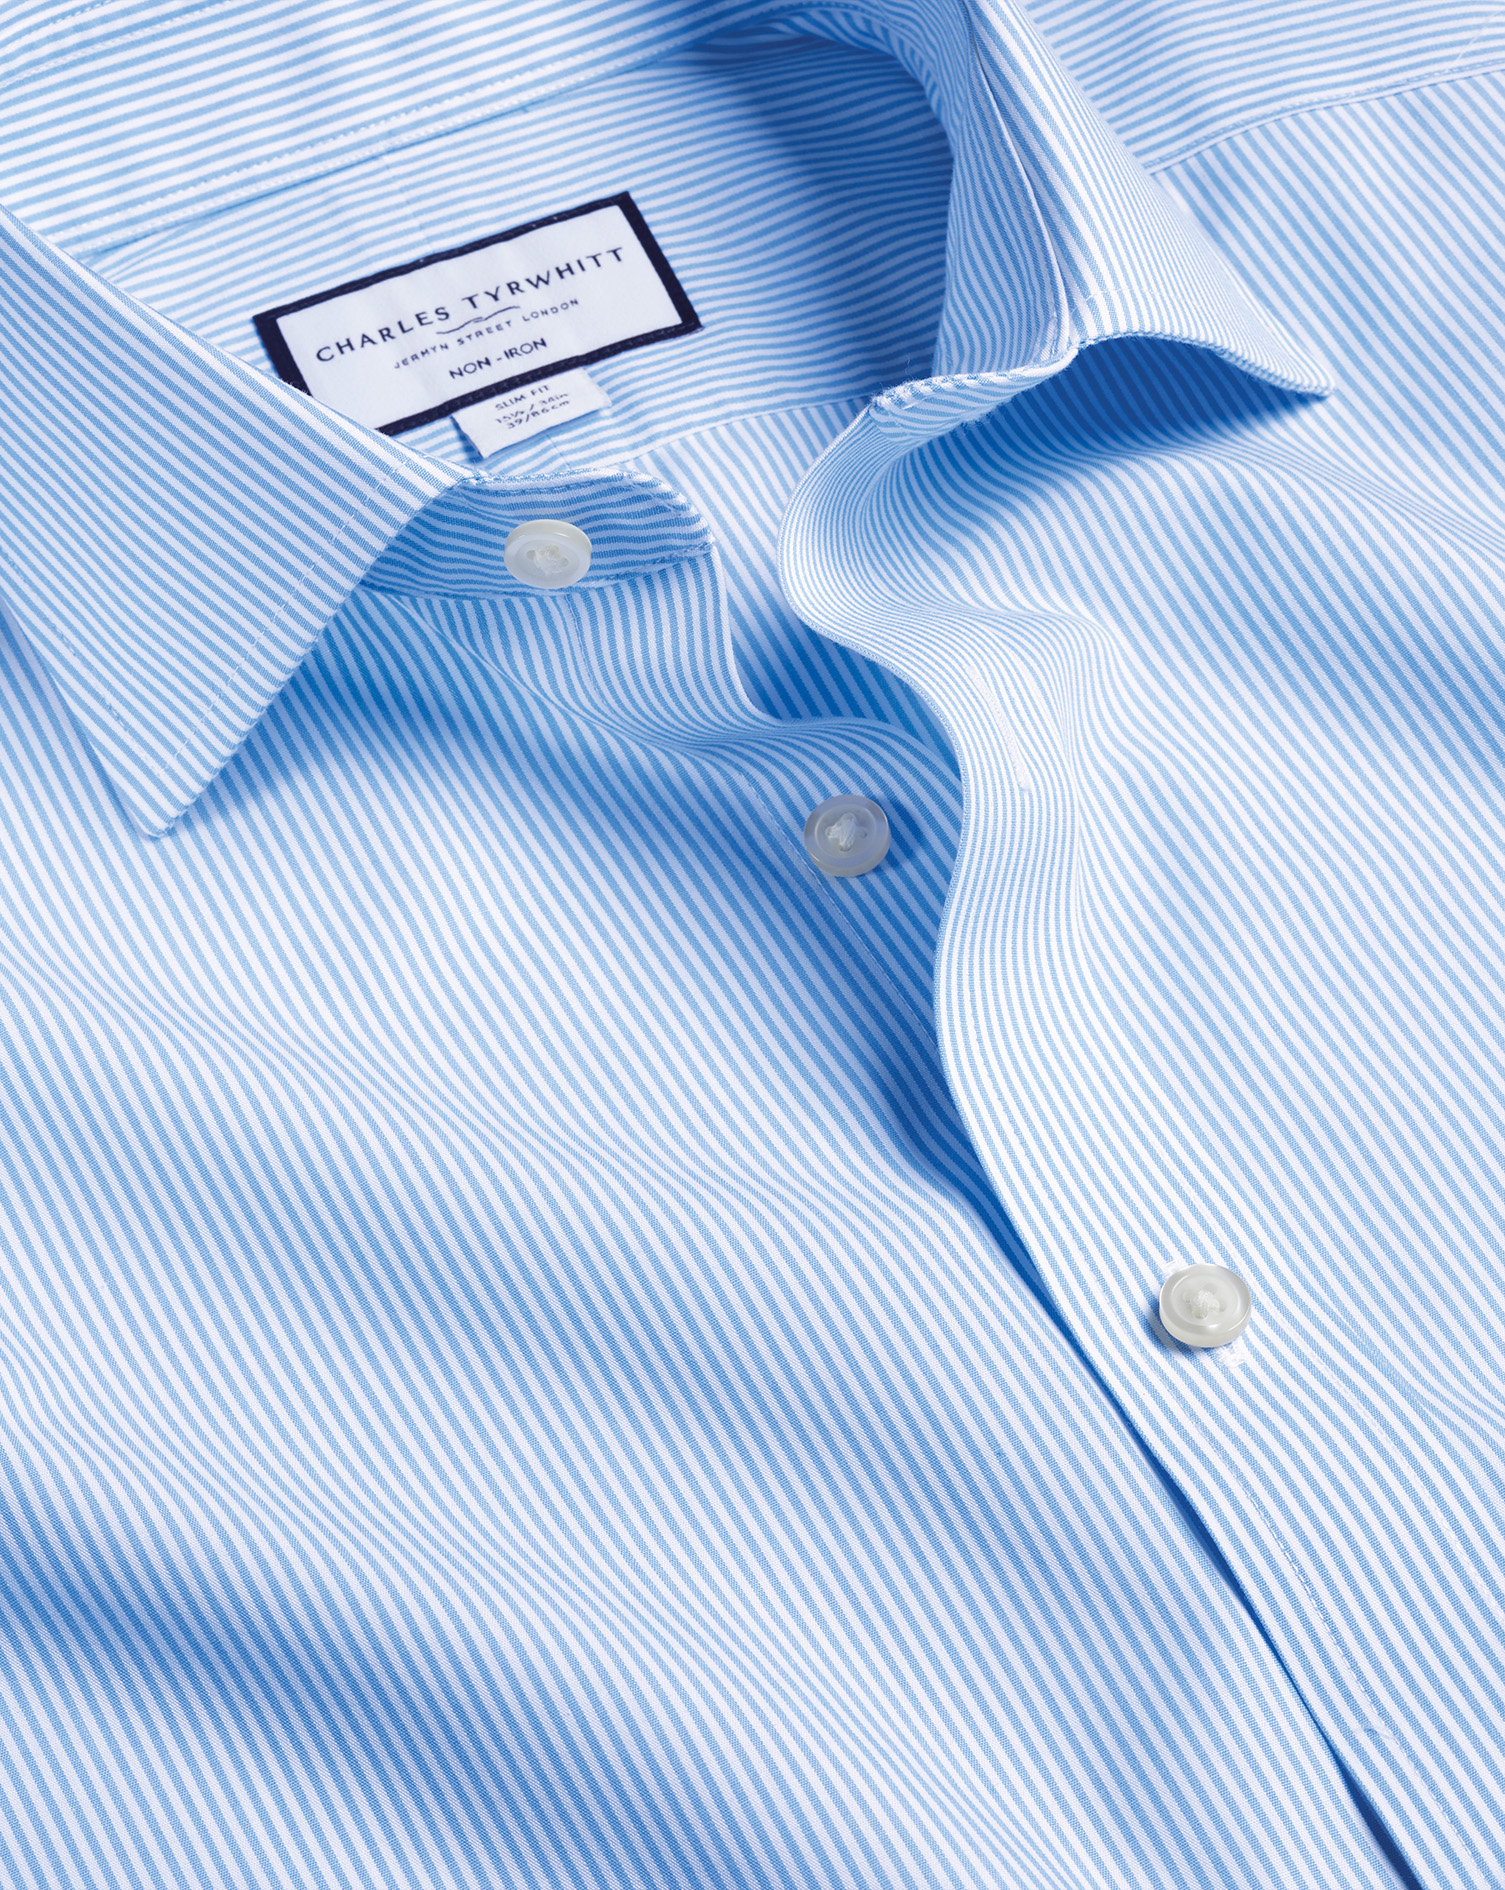 Cutaway Collar Non-Iron Bengal Stripe Cotton Dress Shirt - Cornflower Blue French Cuff Size Medium
